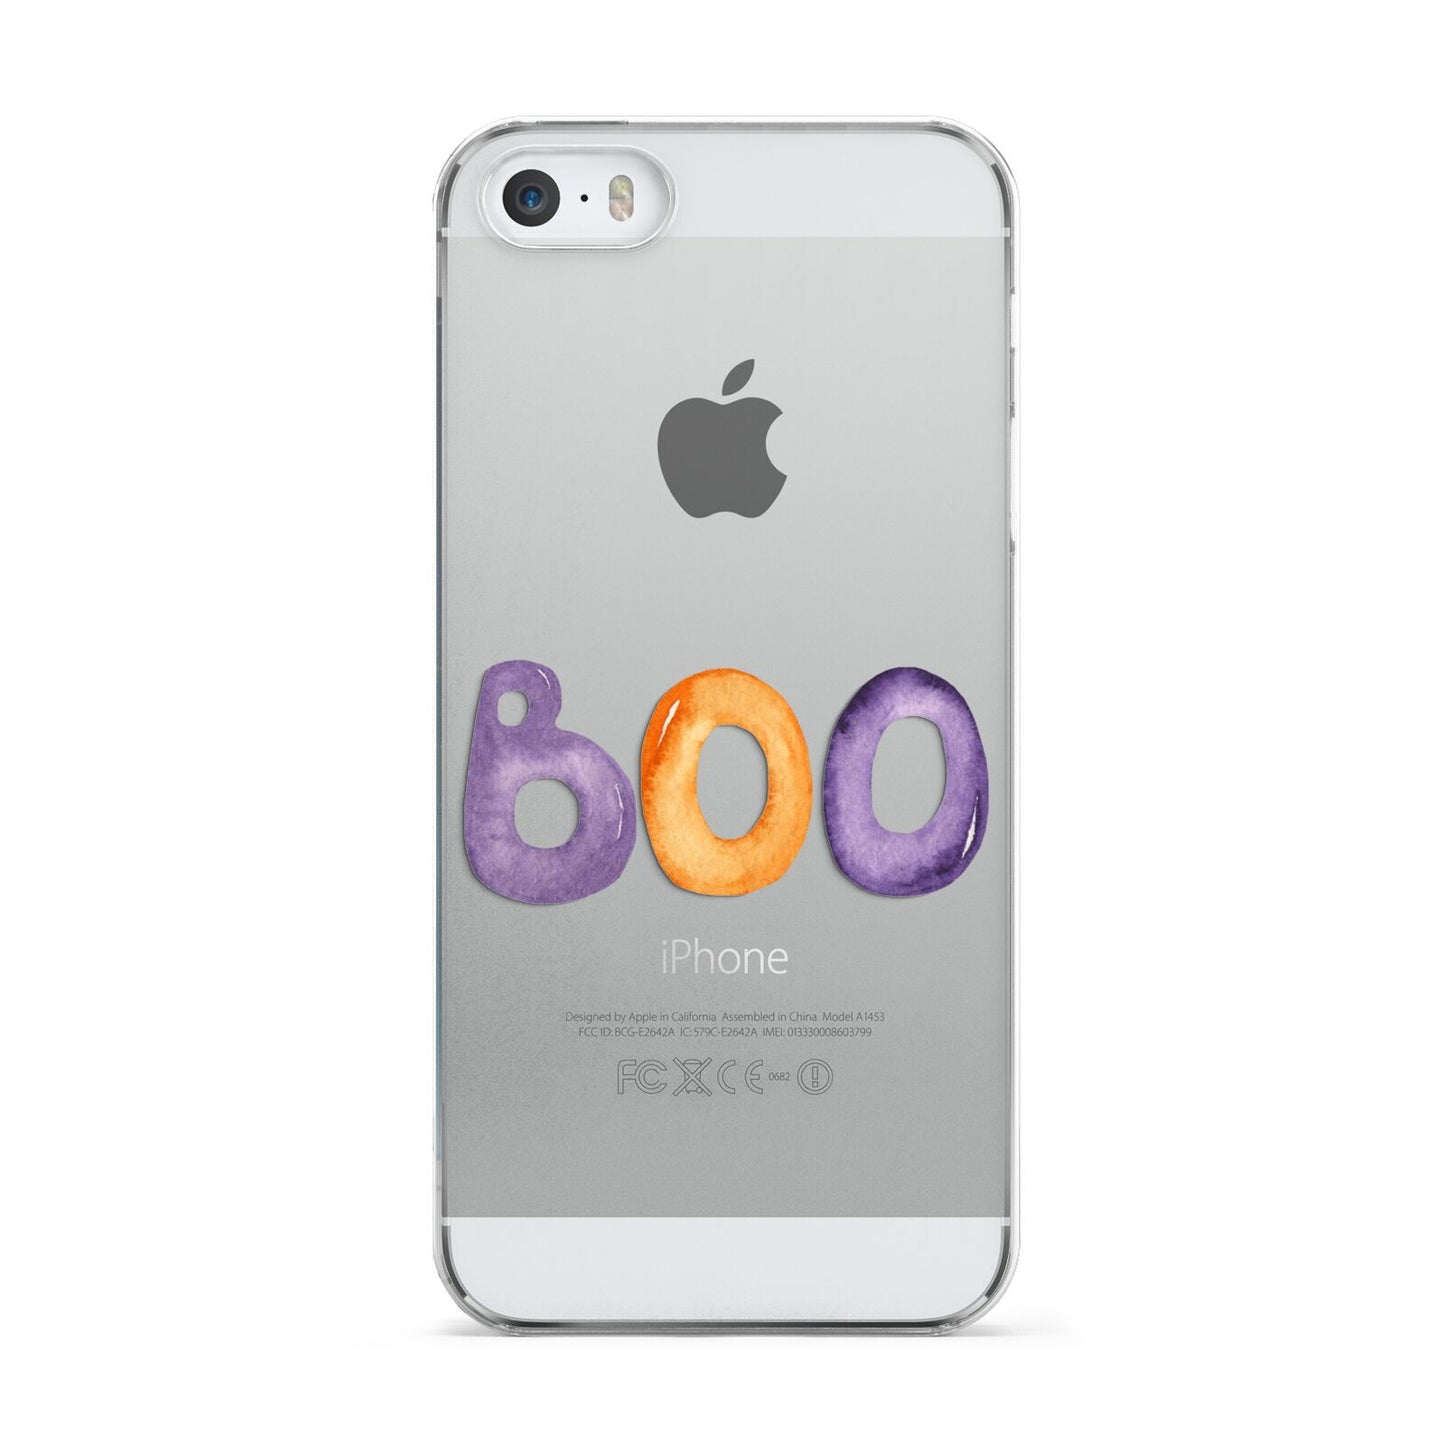 Boo Apple iPhone 5 Case